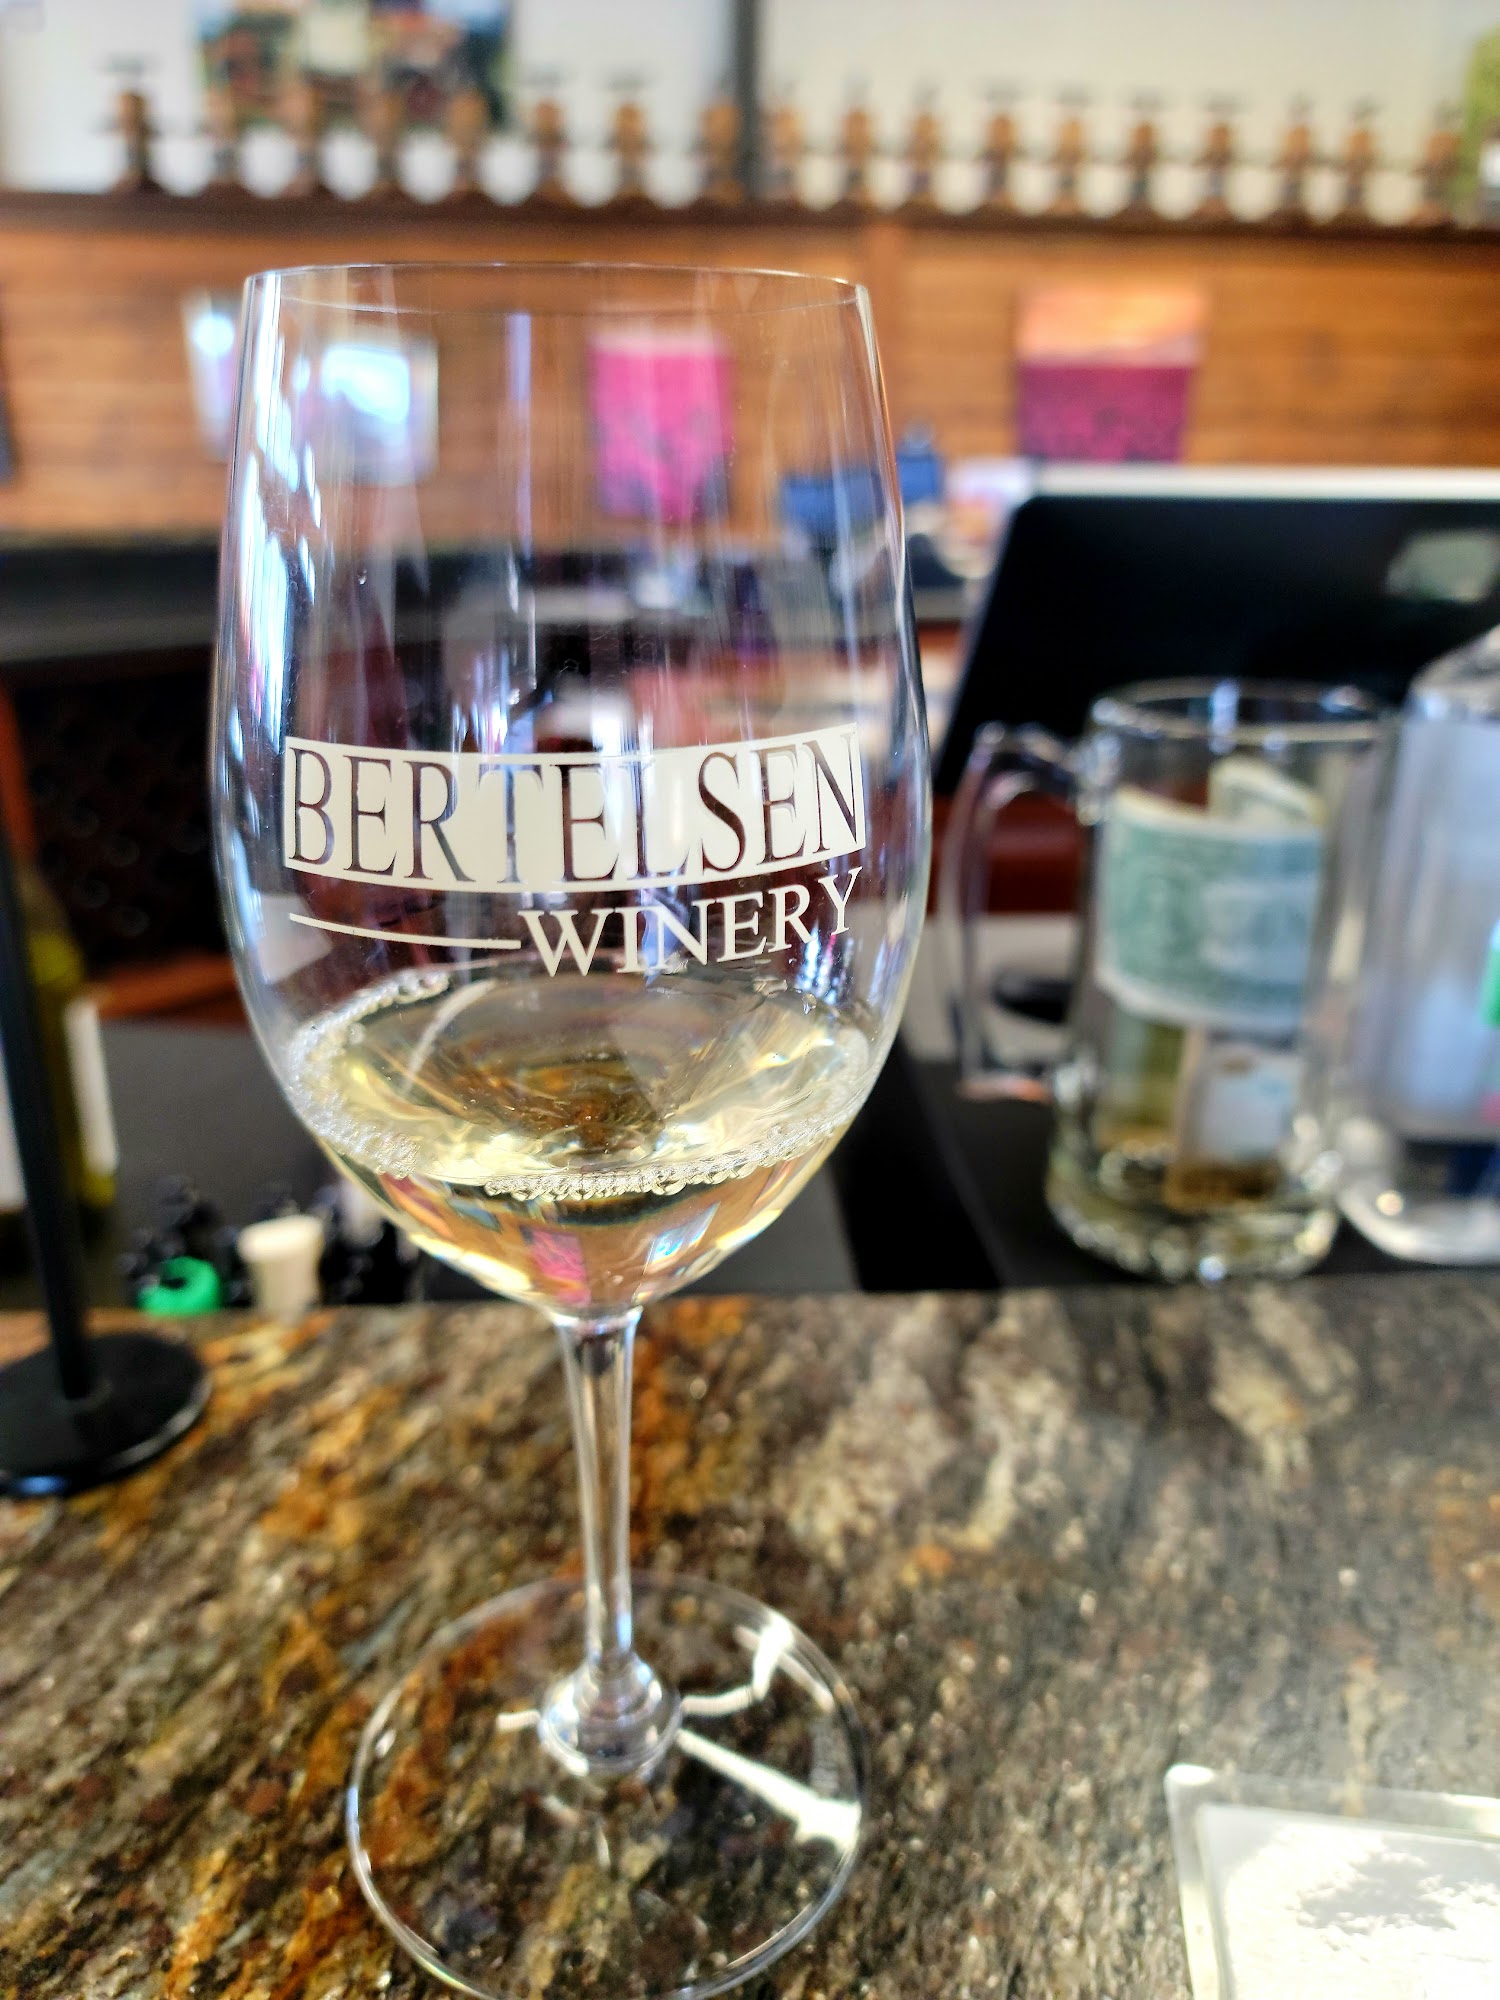 Bertelsen Winery